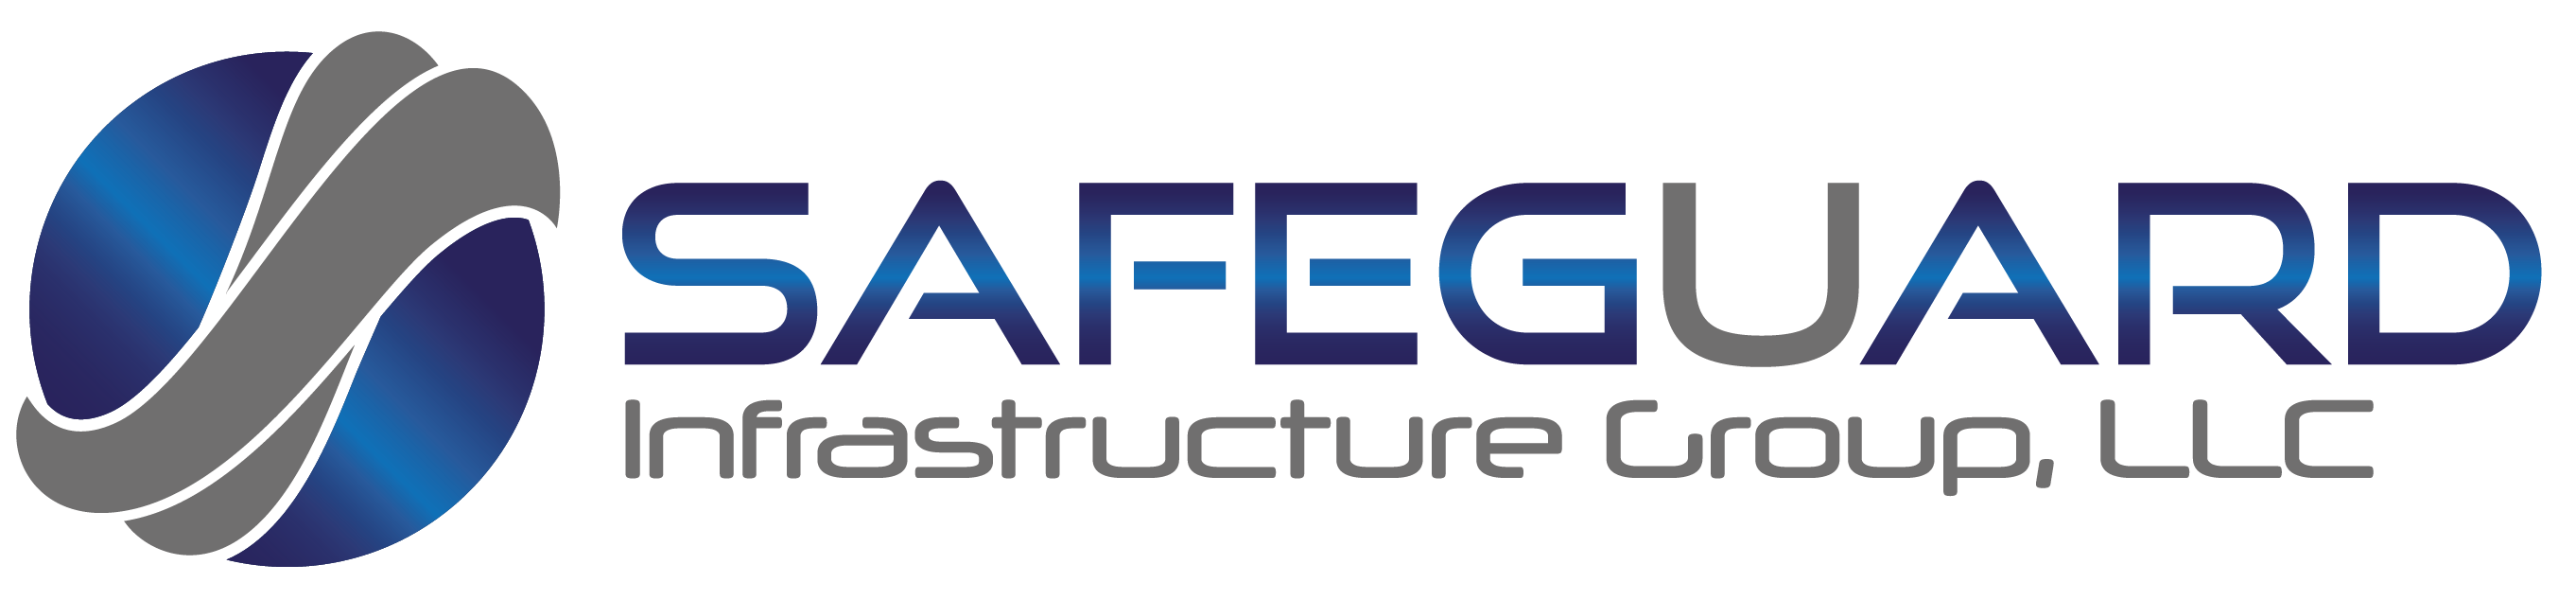 Safeguard Infrastructure Group, LLC